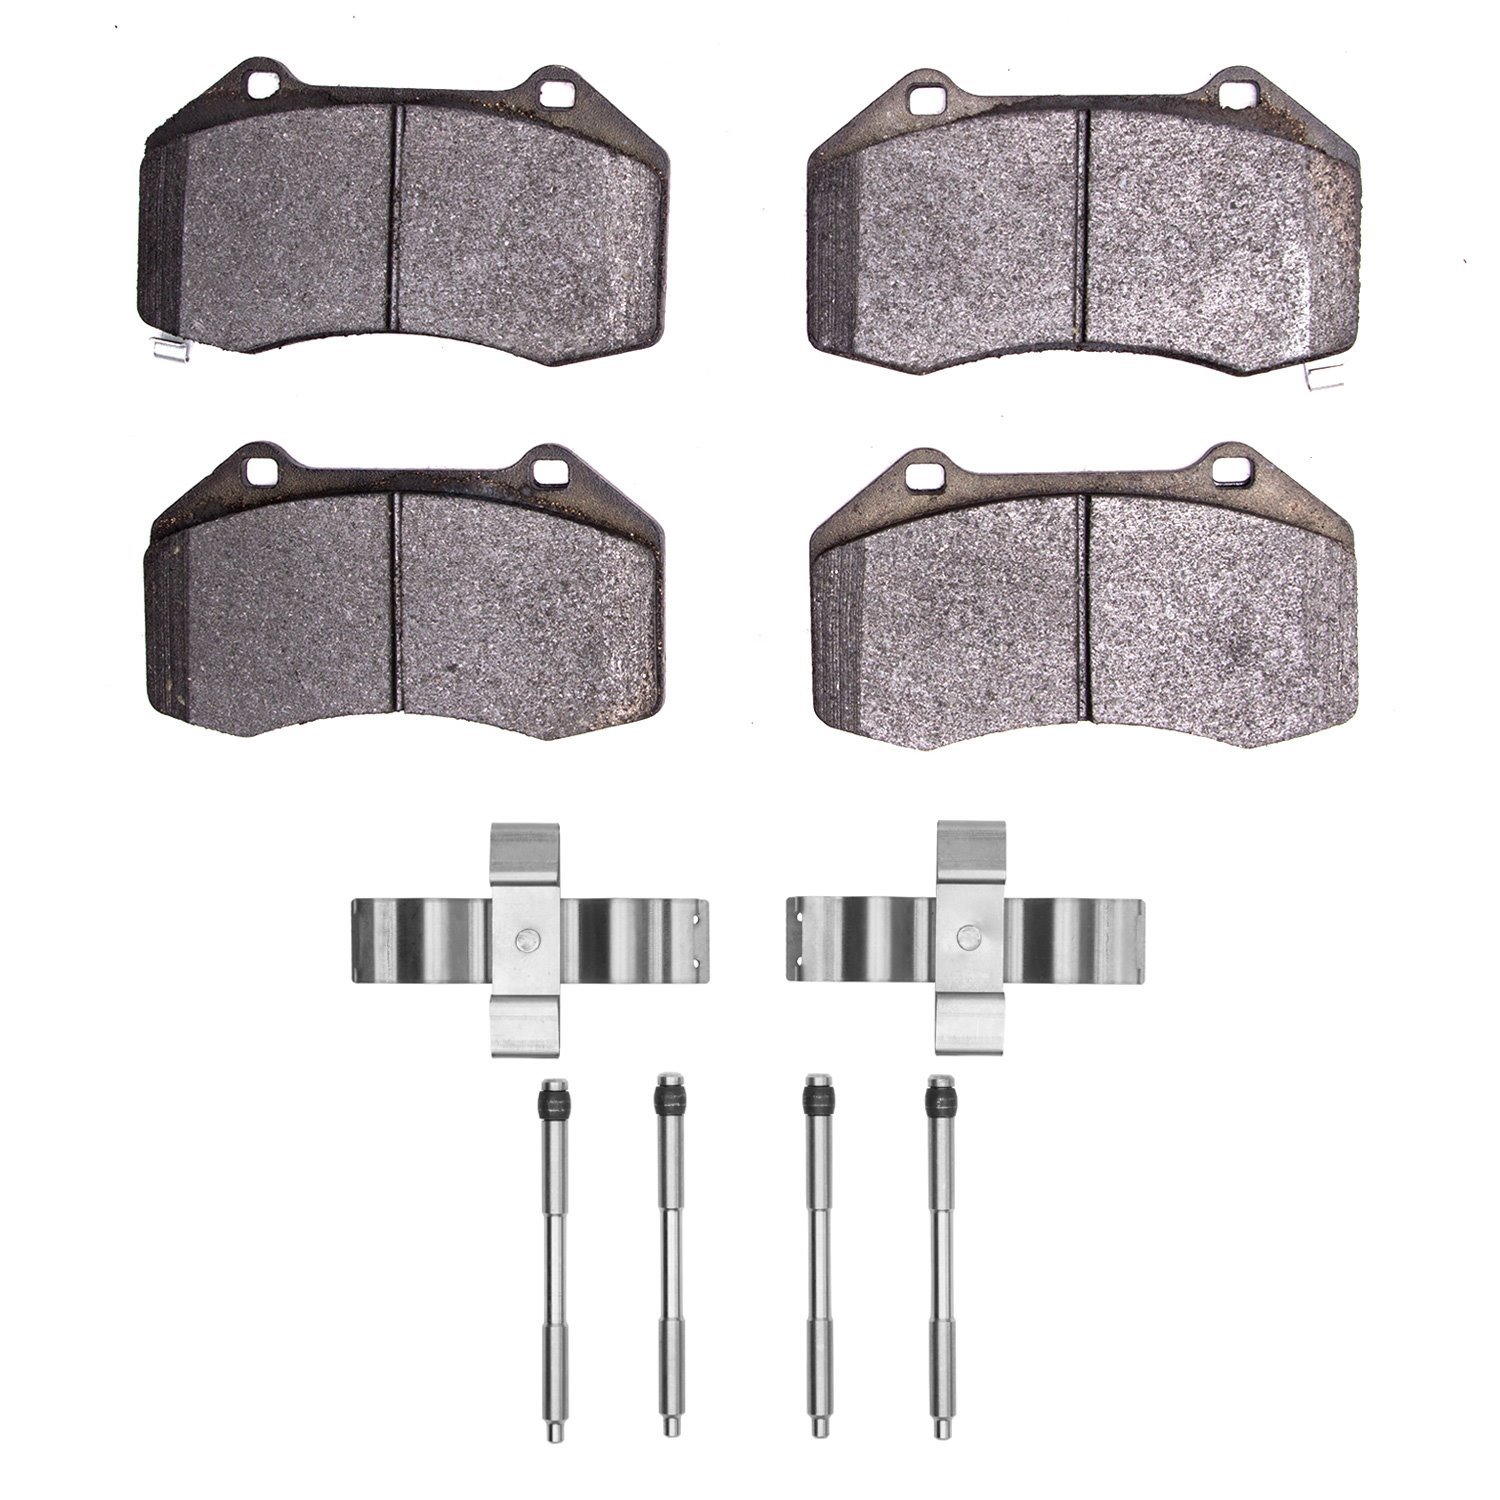 1311-1379-21 3000-Series Semi-Metallic Brake Pads & Hardware Kit, Fits Select Multiple Makes/Models, Position: Front